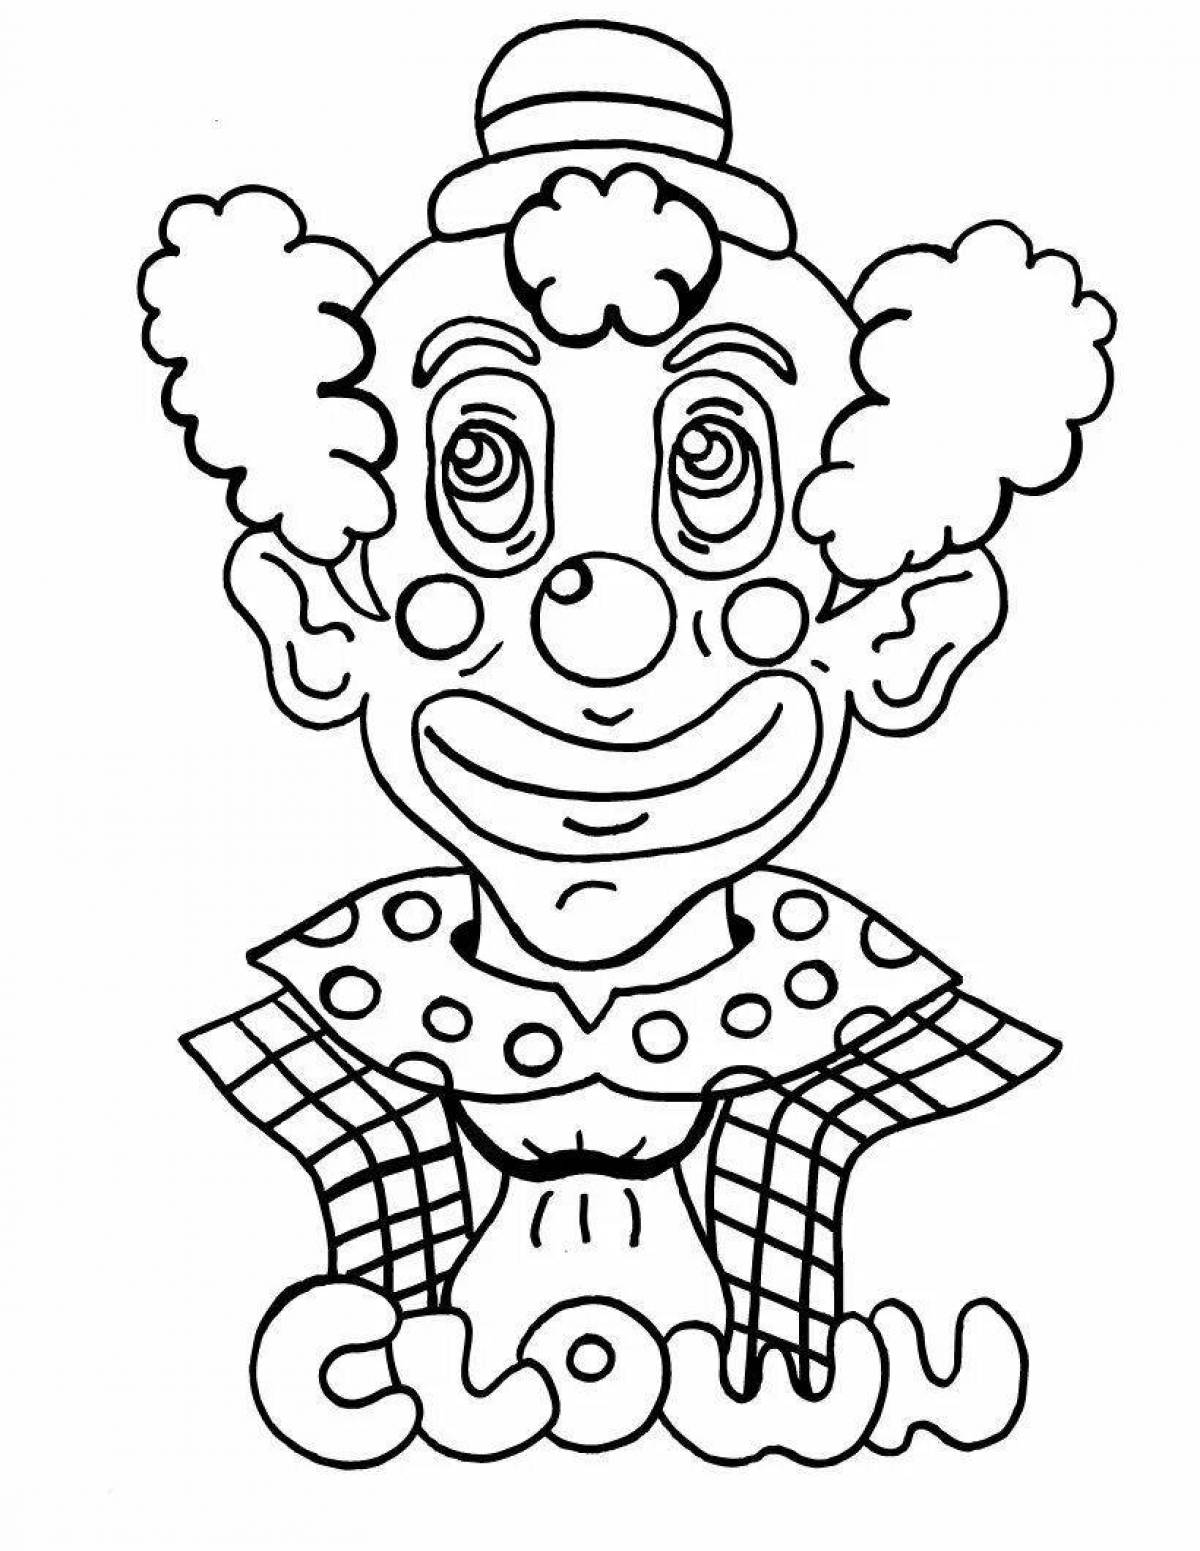 Fun coloring book funny clown for kids